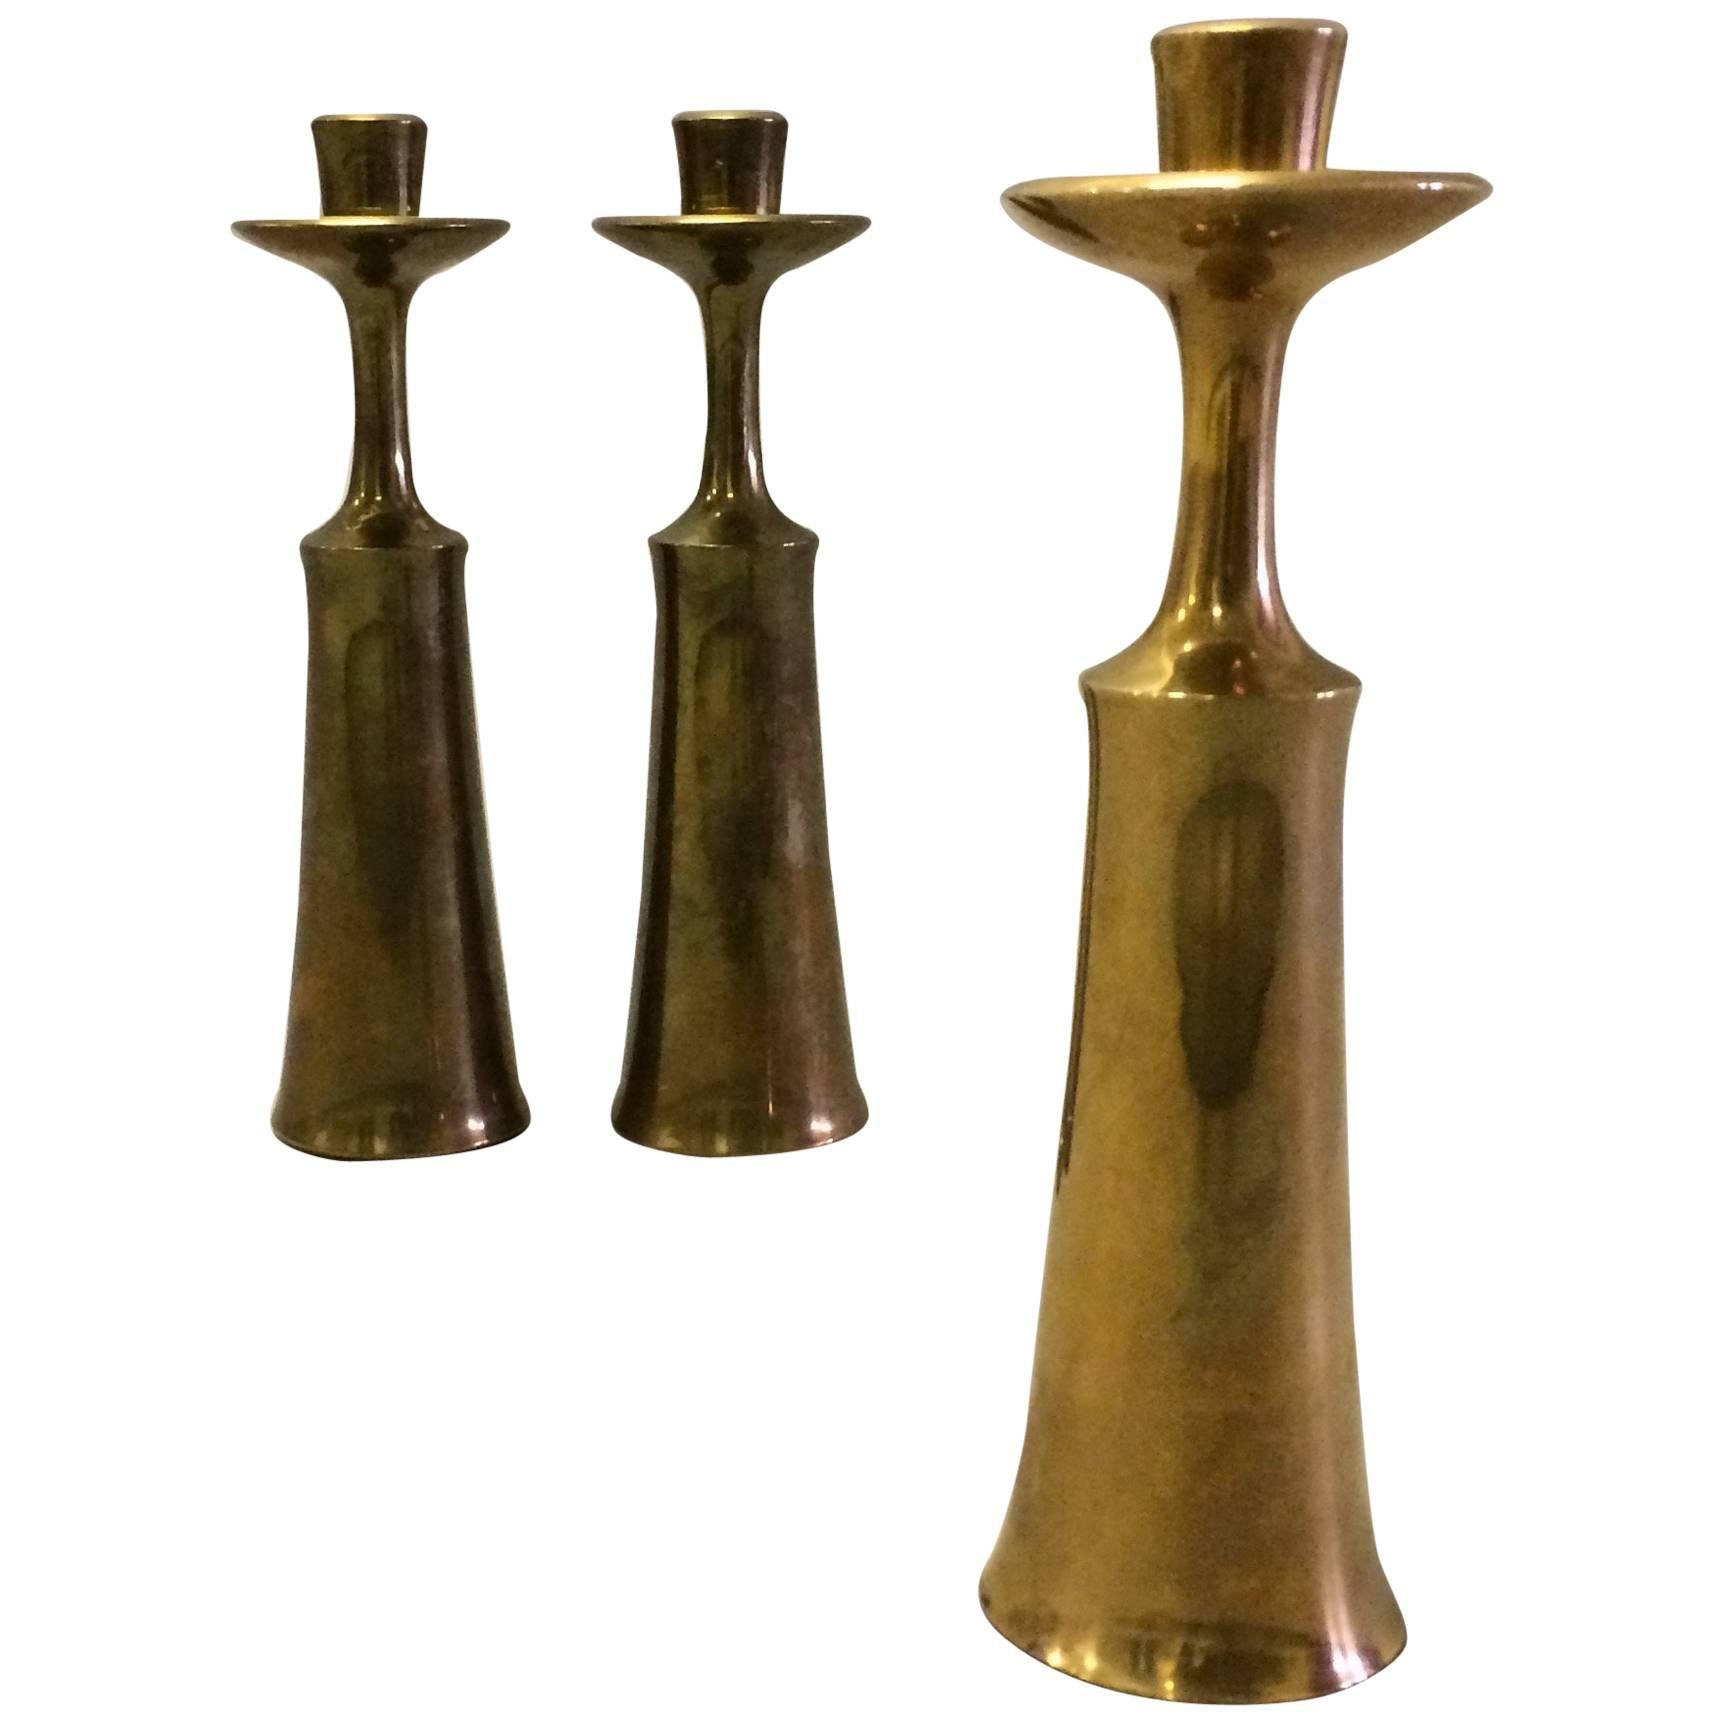 1960s Set of Three Candleholders/Vases i by Danish Designer Jens H. Quistgaard